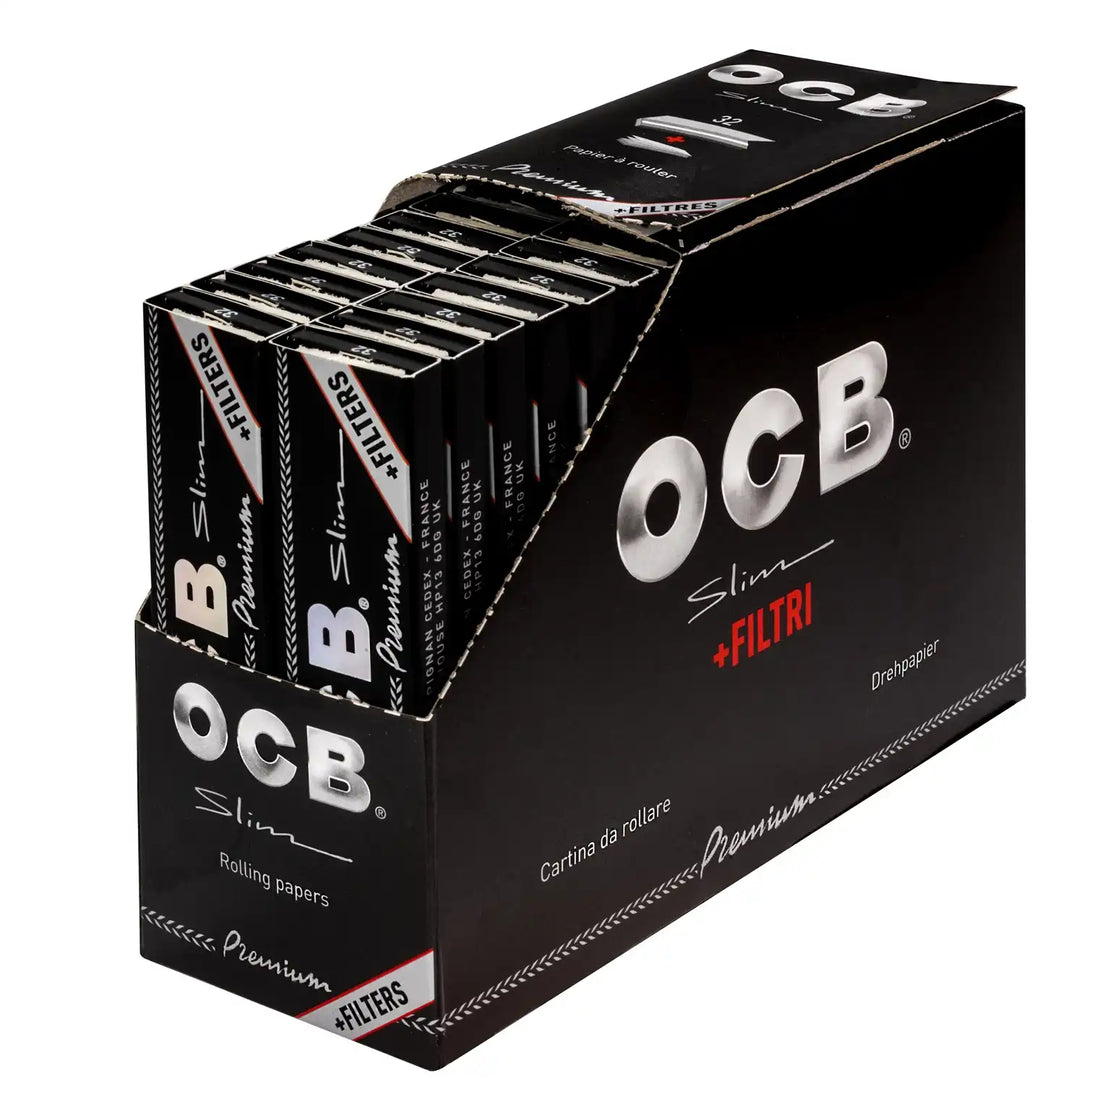 OCB Black Slim with Filters